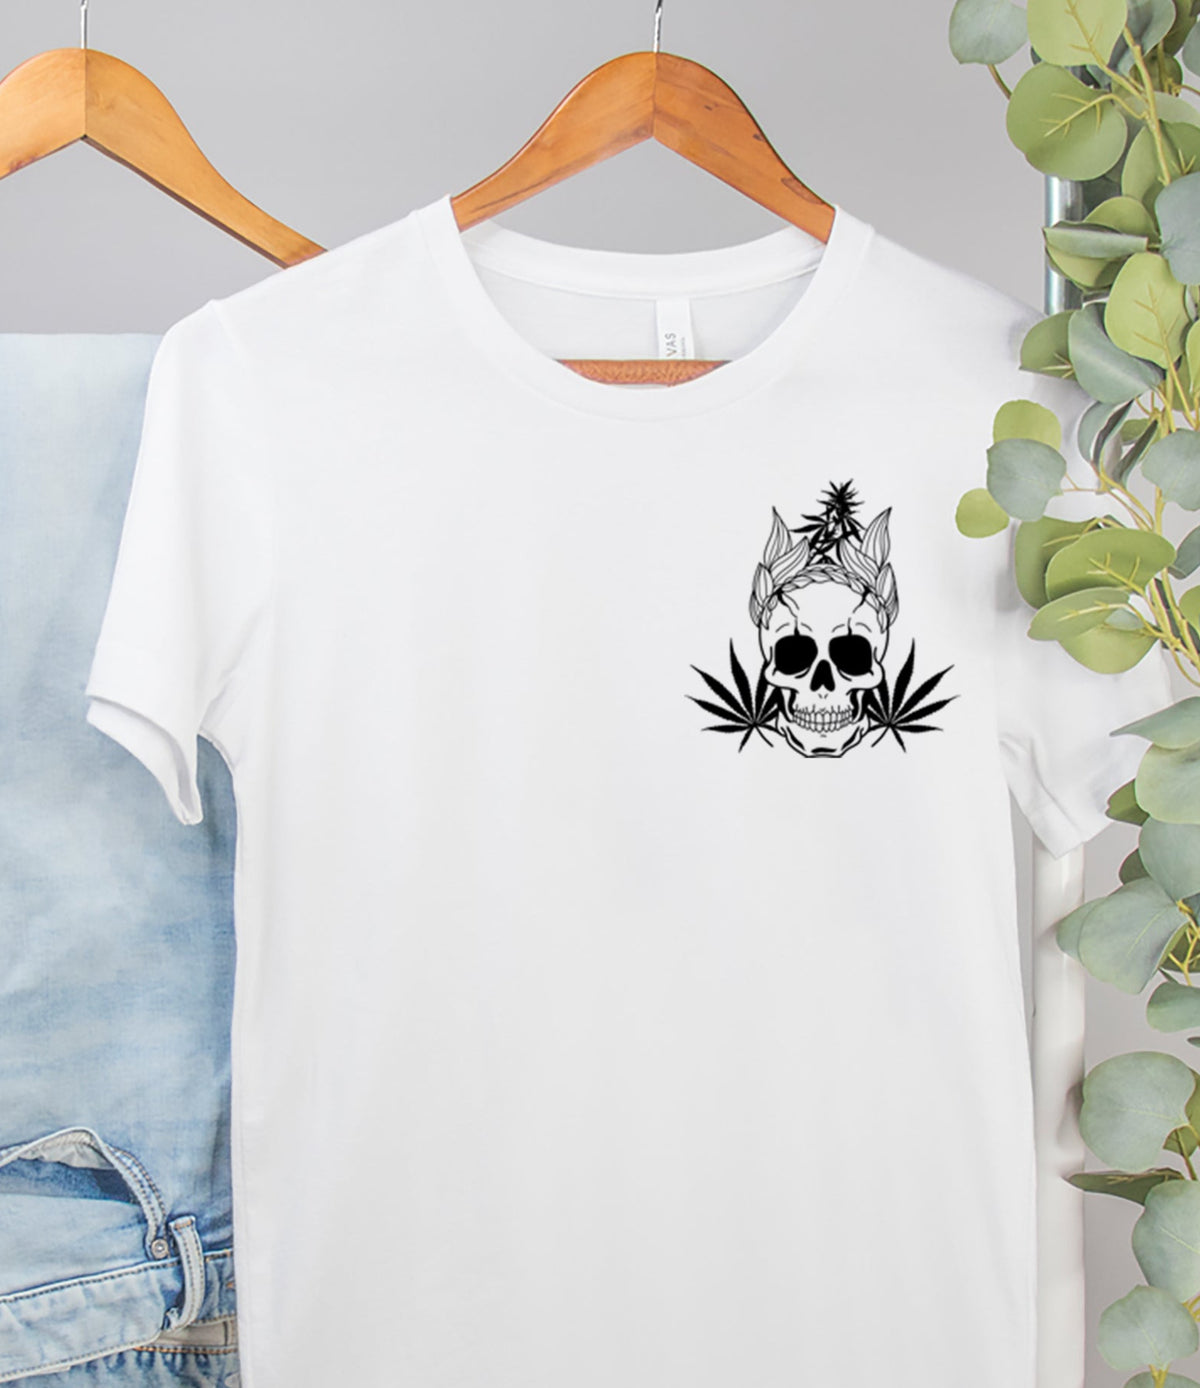 weed tattoo style shirt - HighCiti